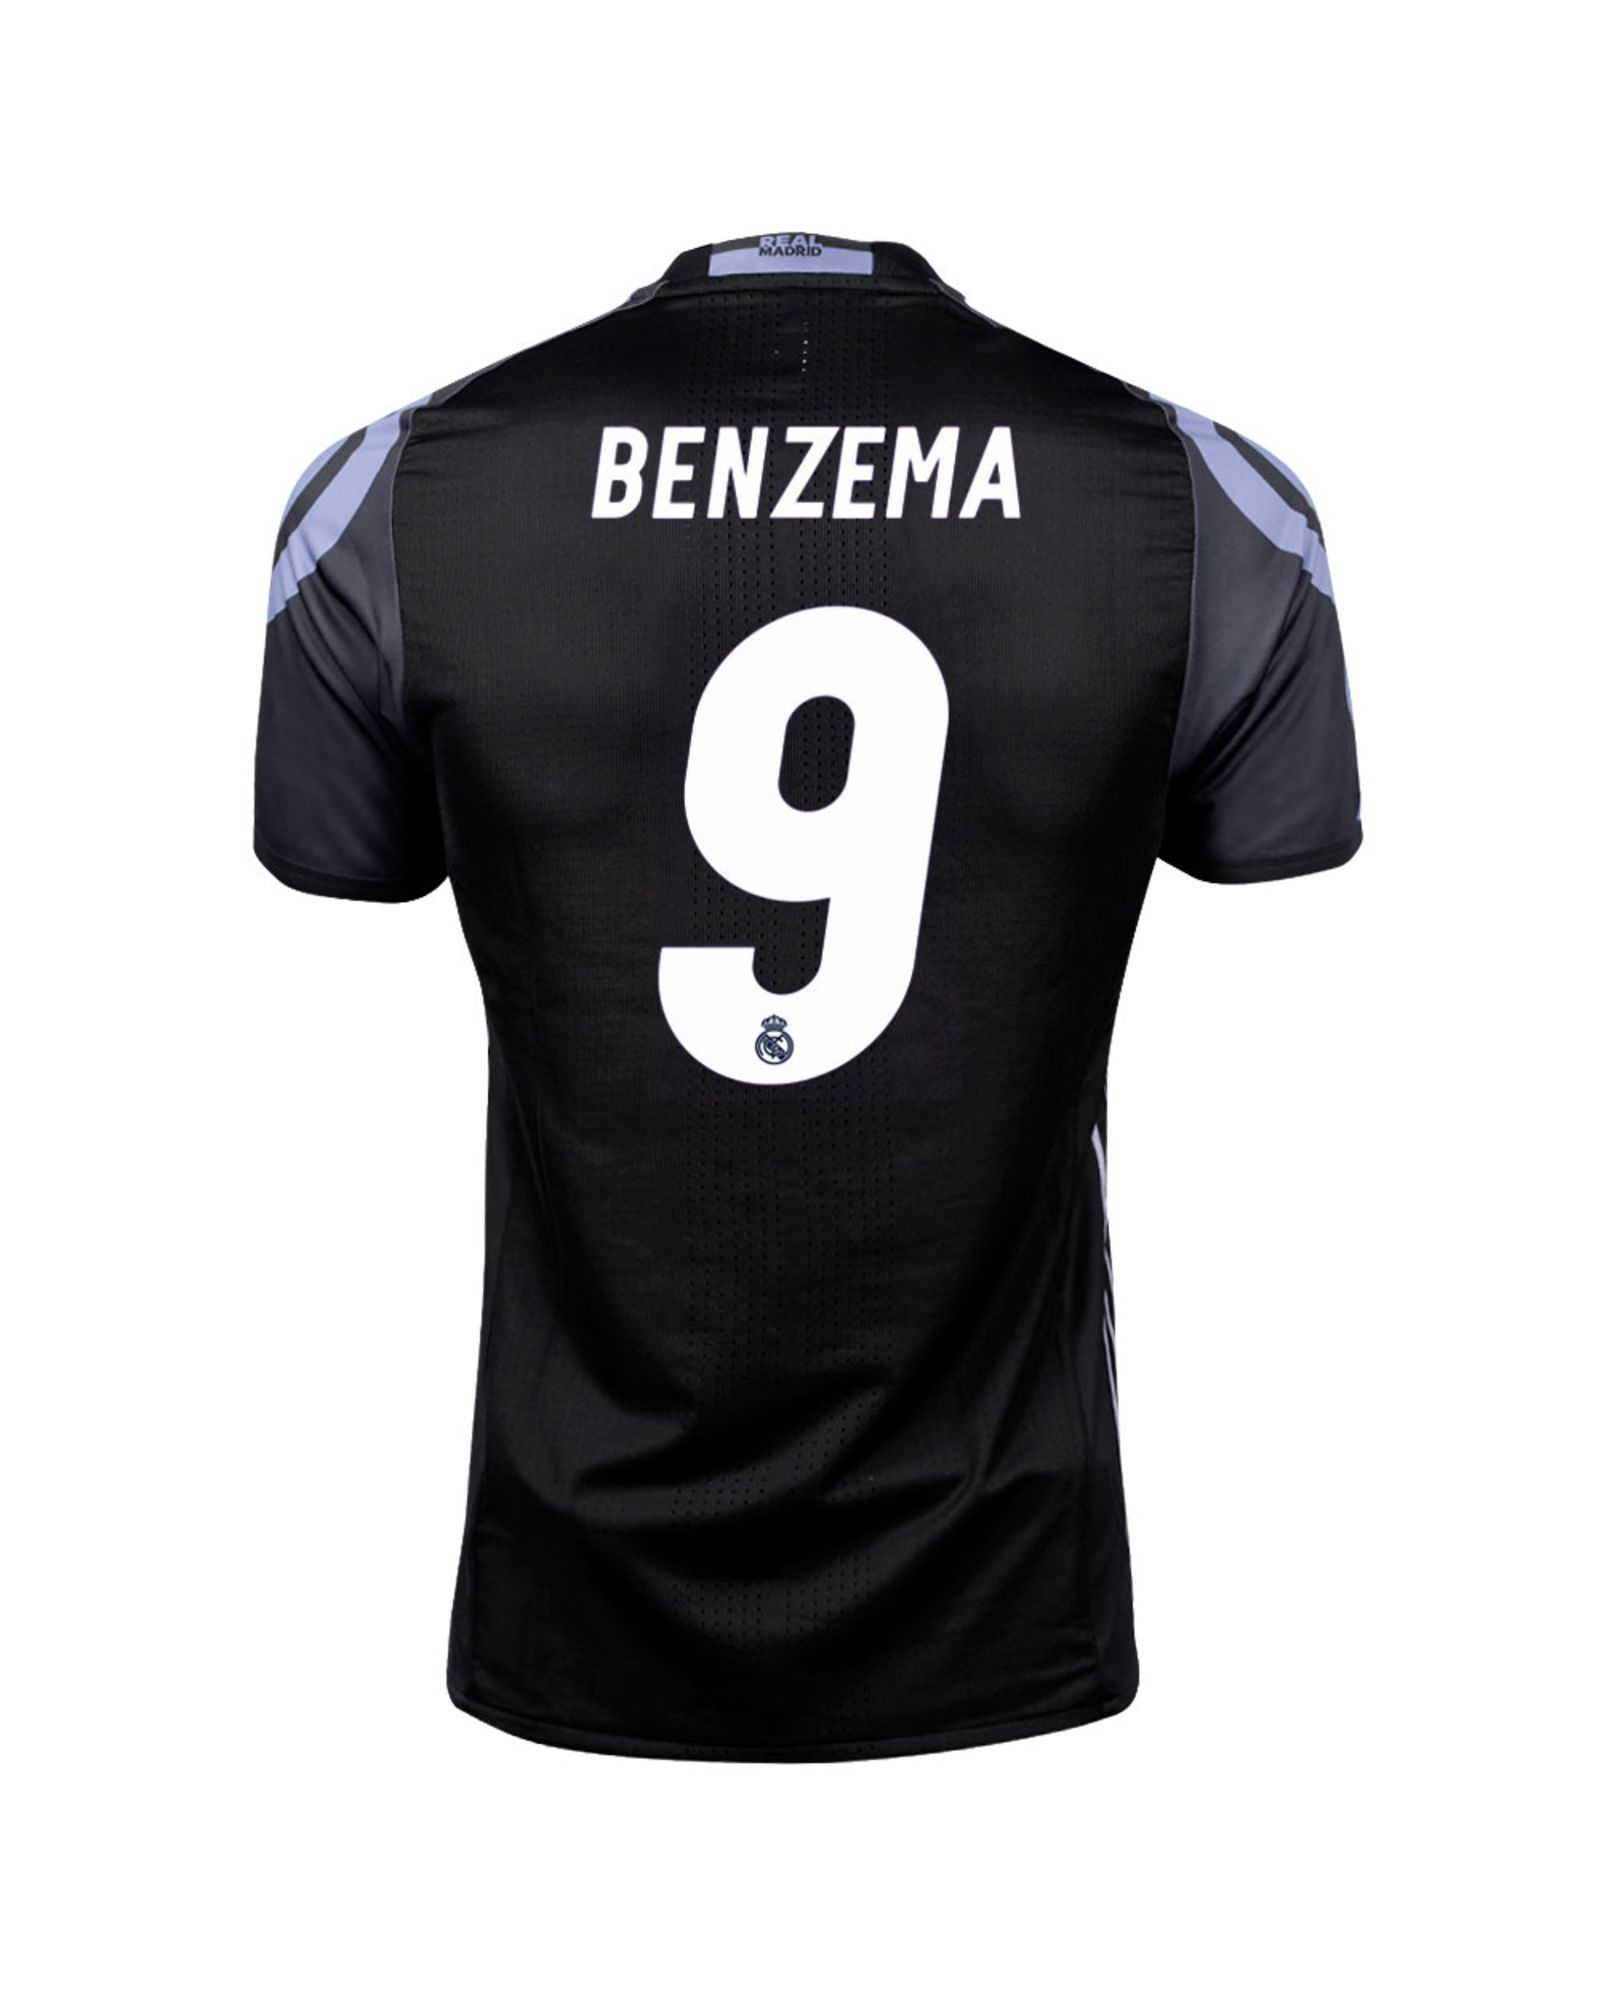 Camiseta 3ª Real Madrid 2016/2017 Benzema UCL AU Negro - Fútbol Factory